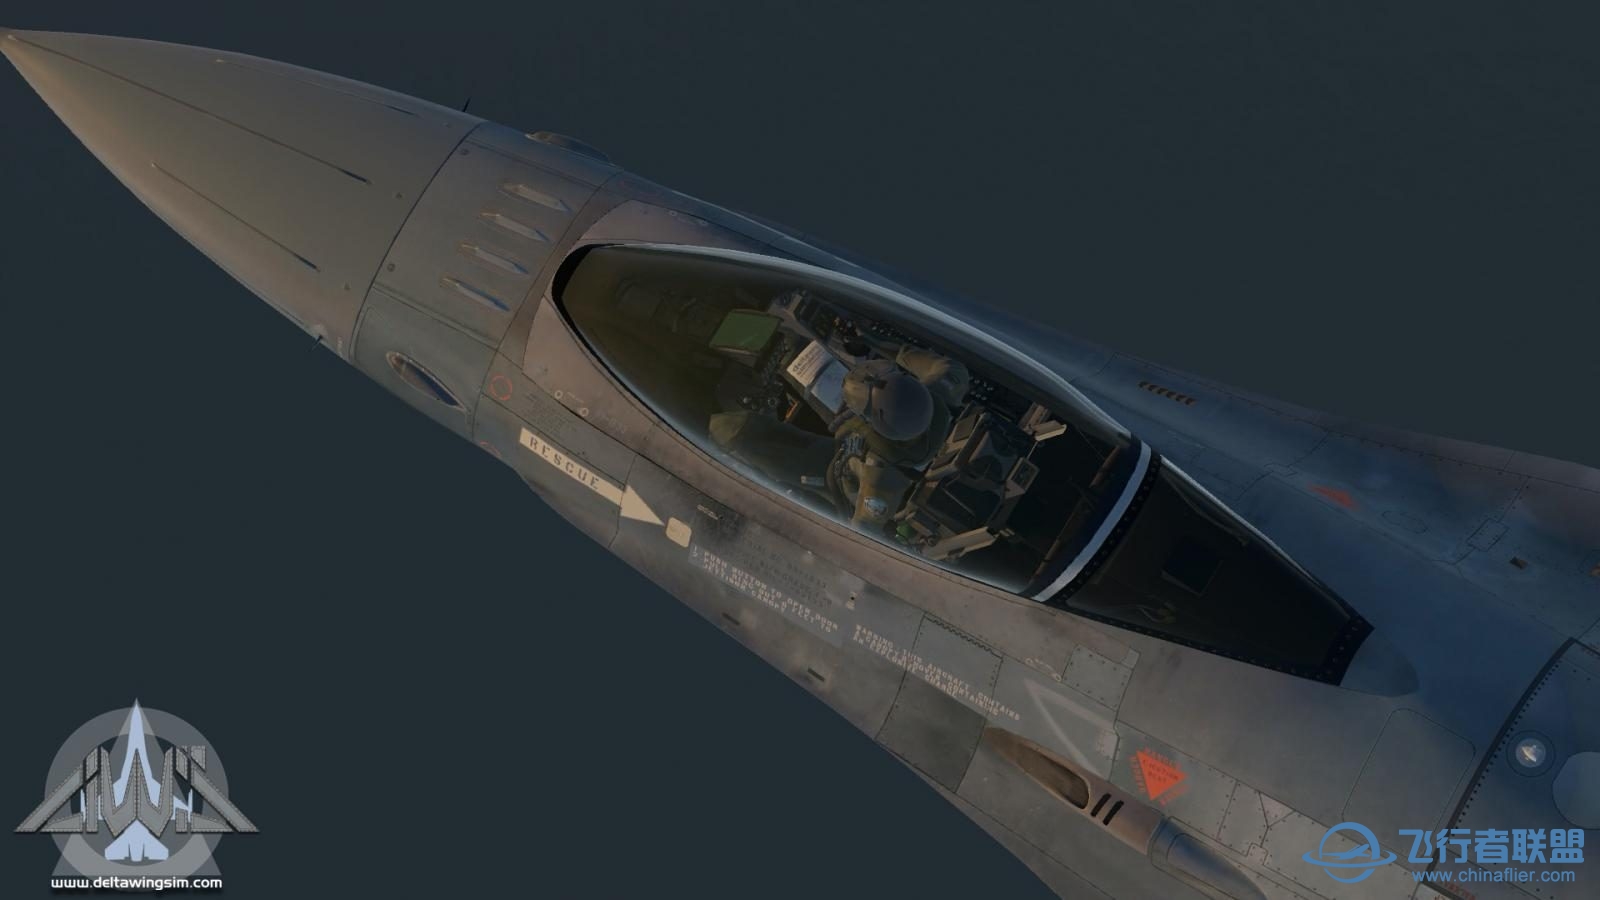 DeltaWing Simulations 发布 F-16C XPL-2197 